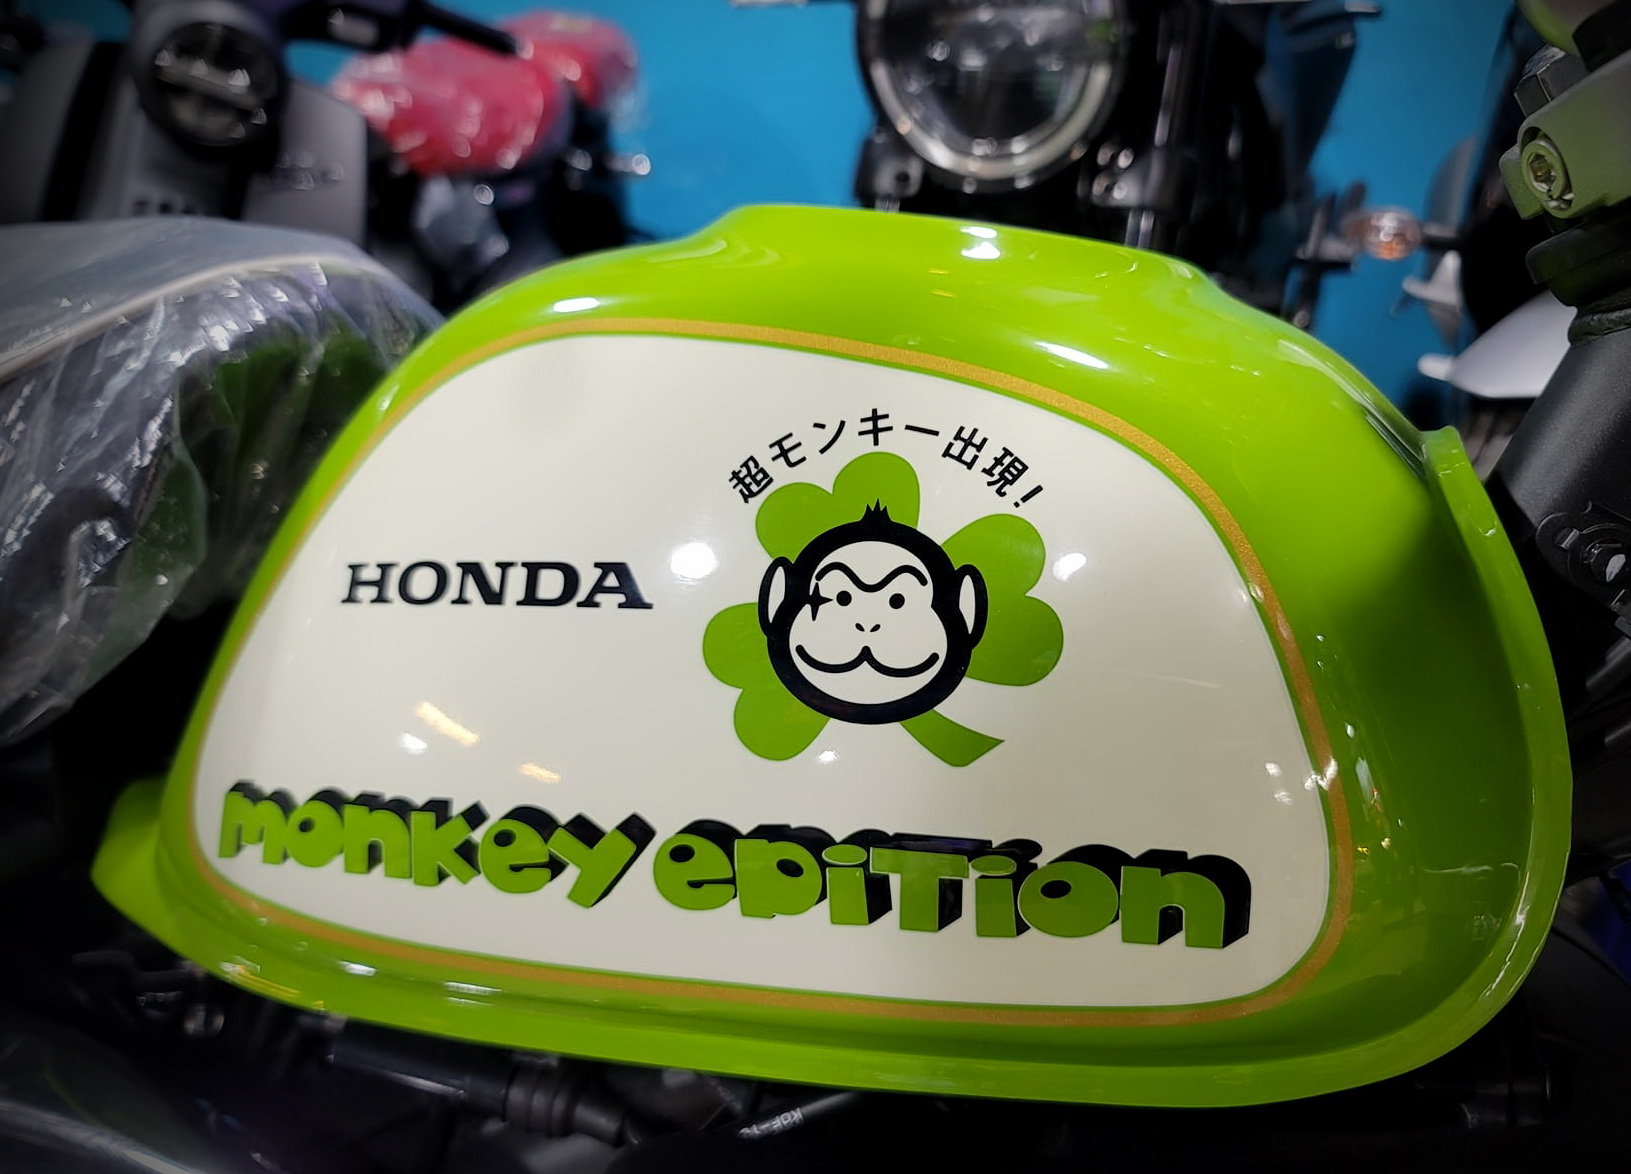 HONDA Monkey 125新車出售中 四葉草【勝大重機】全新車 五檔 HONDA MONKEY 125 四葉草 限量200台 售價$23.8萬 | 勝大重機